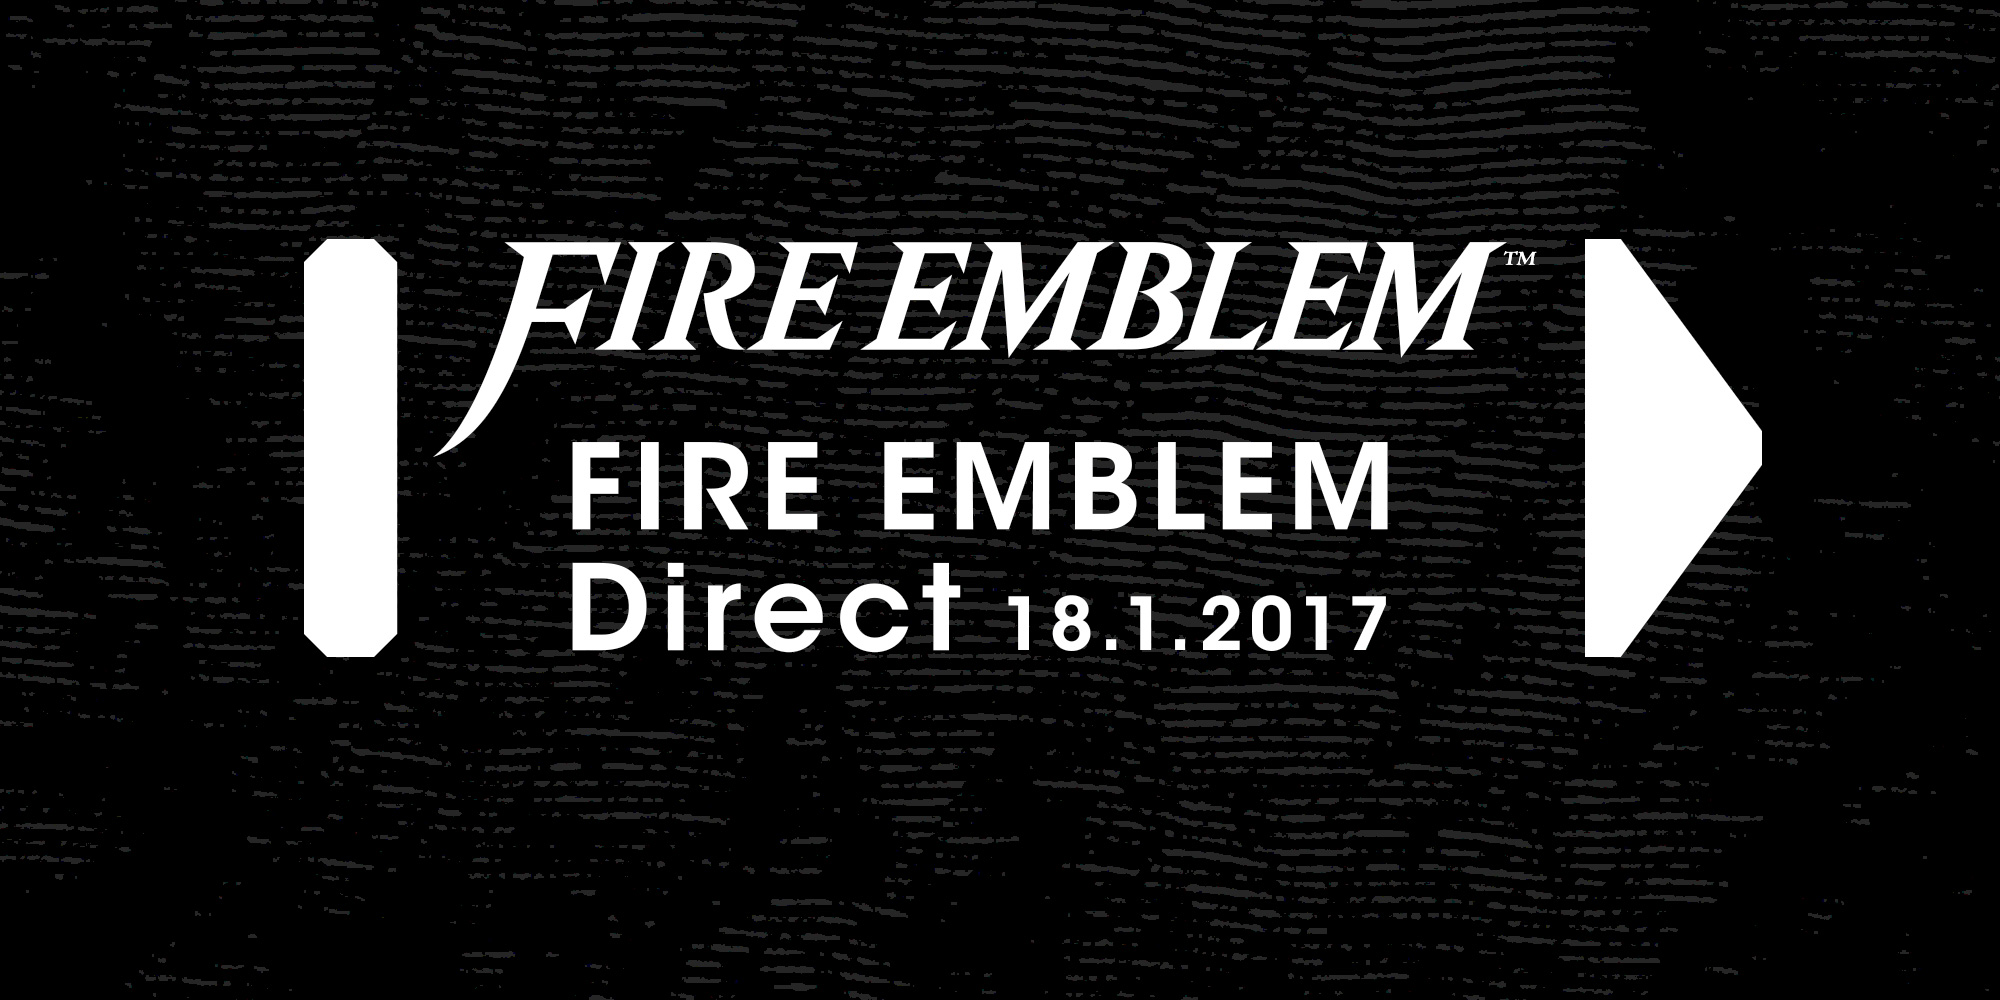 Fire Emblem Nintendo Direct te zien op woensdag 18 januari